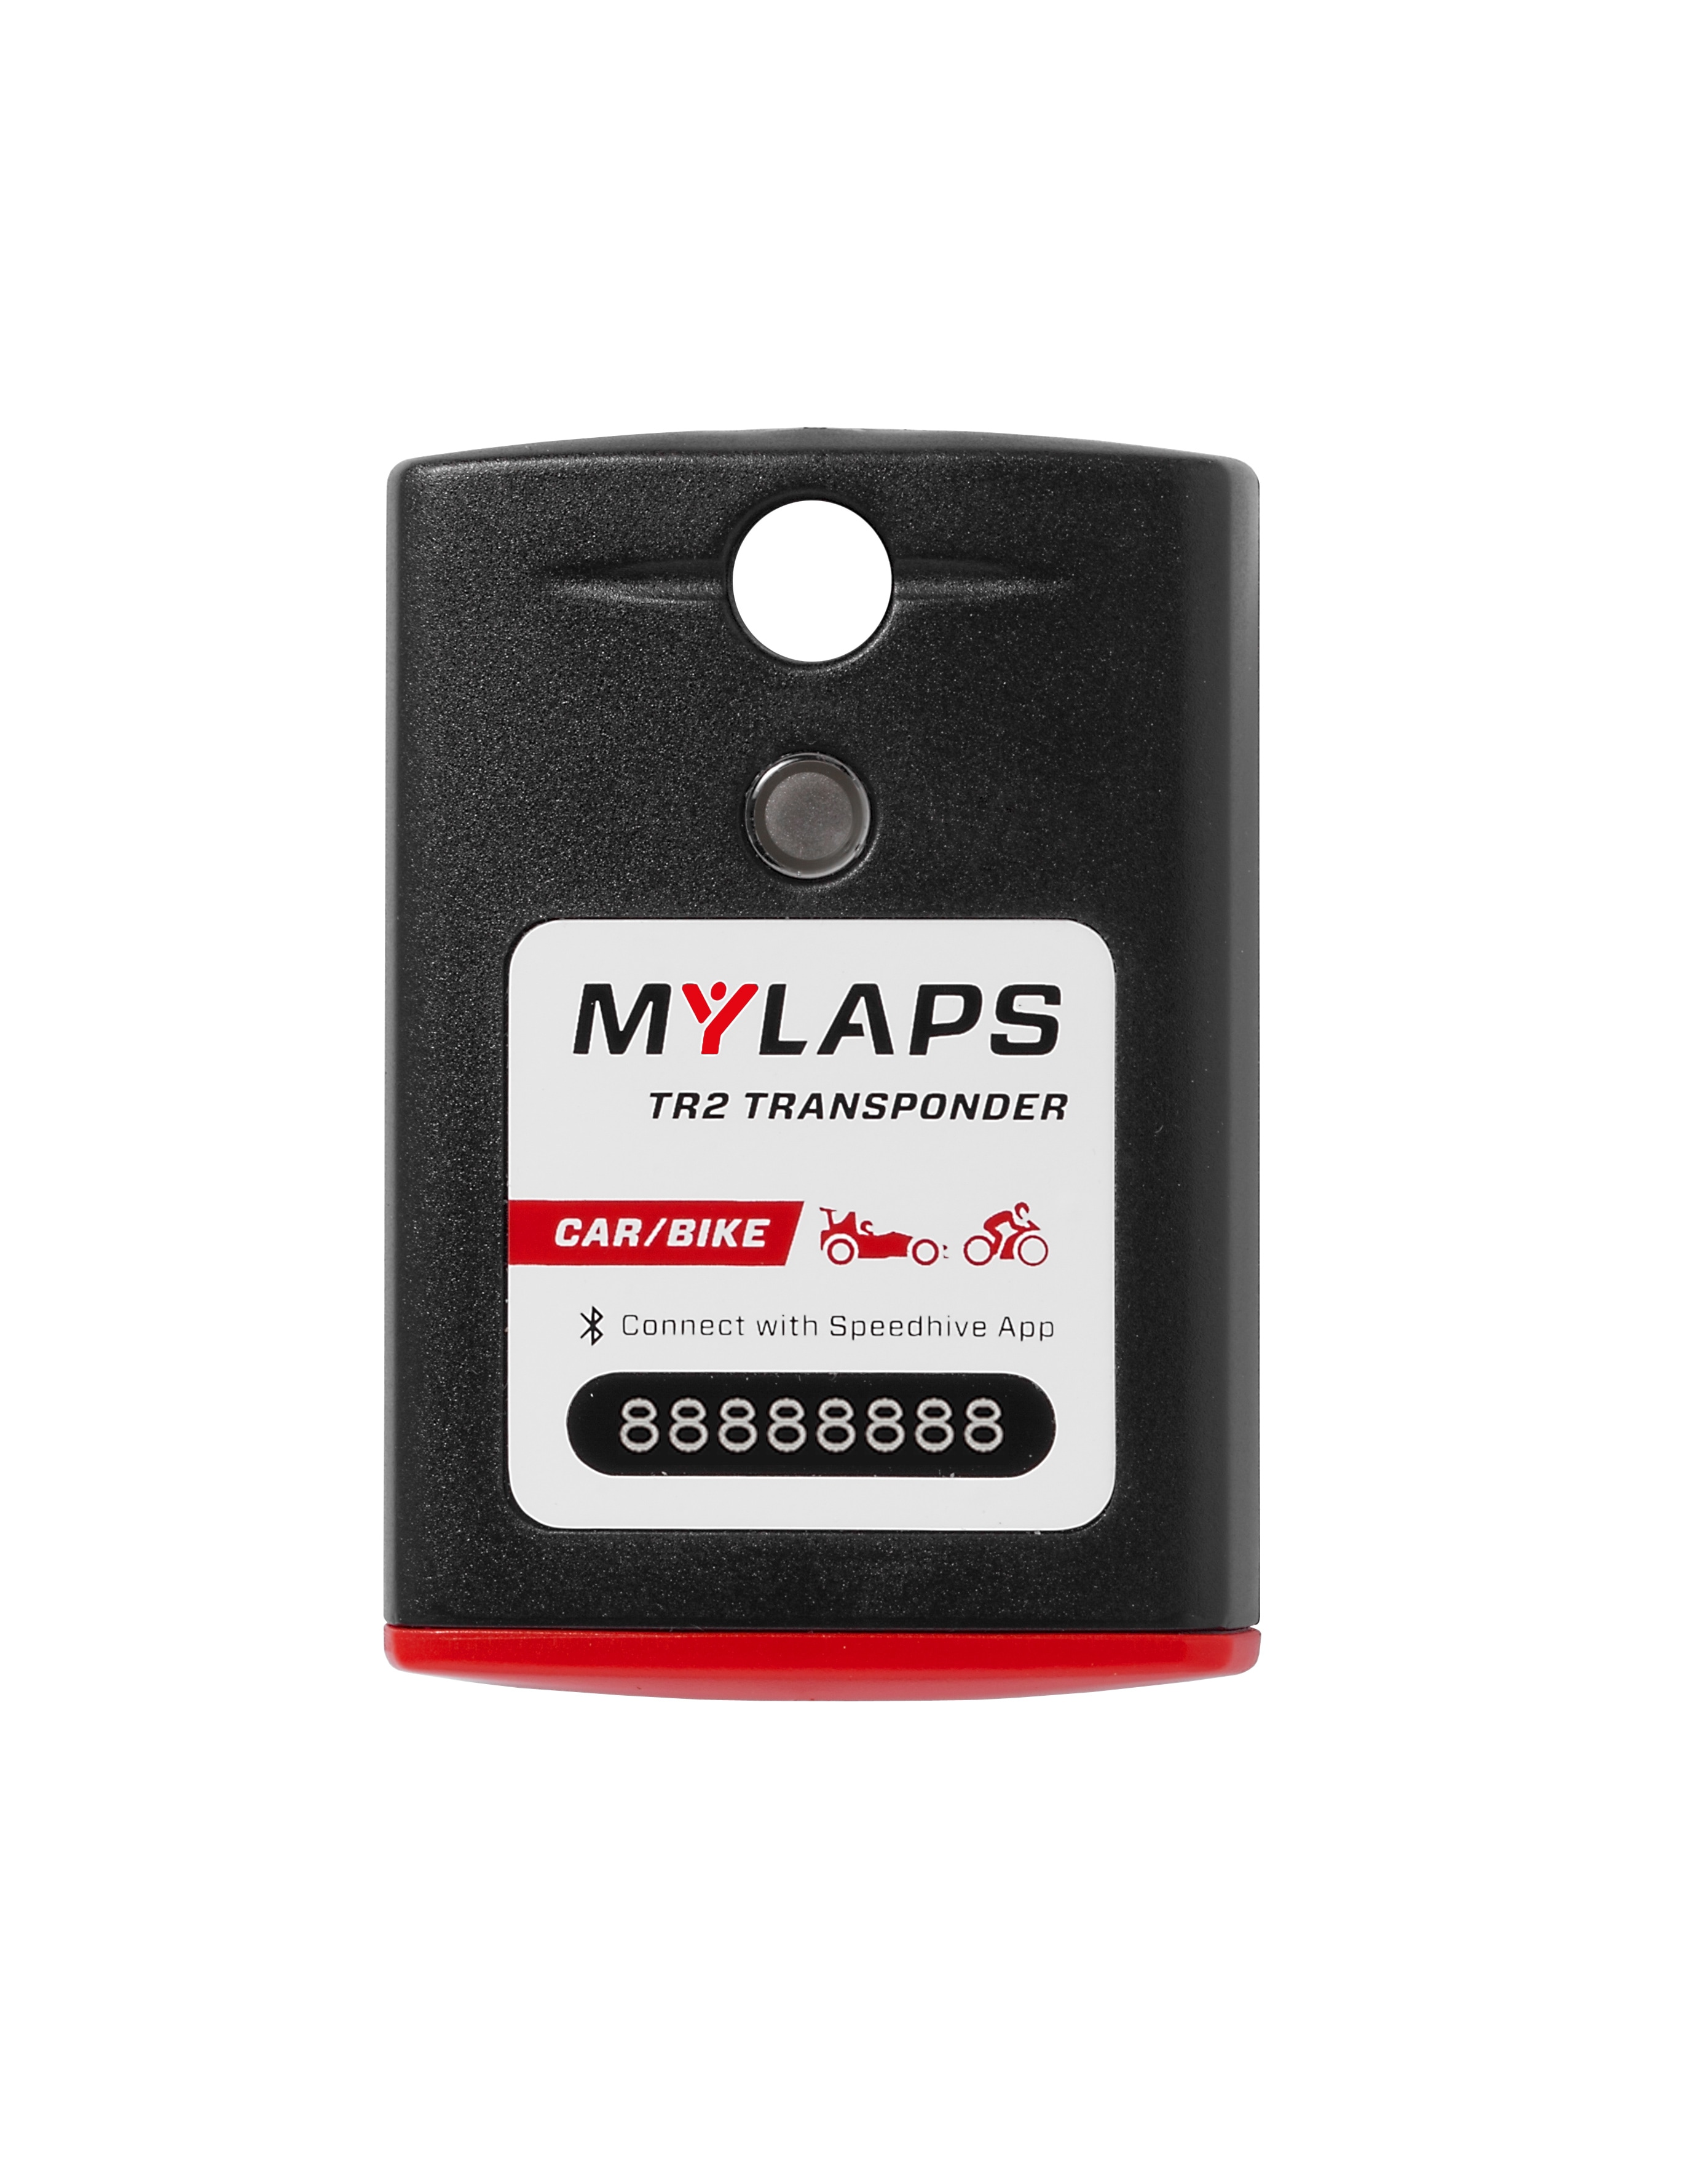 Transponder MyLaps TR2 Car/Bike 1 year(Not MX)